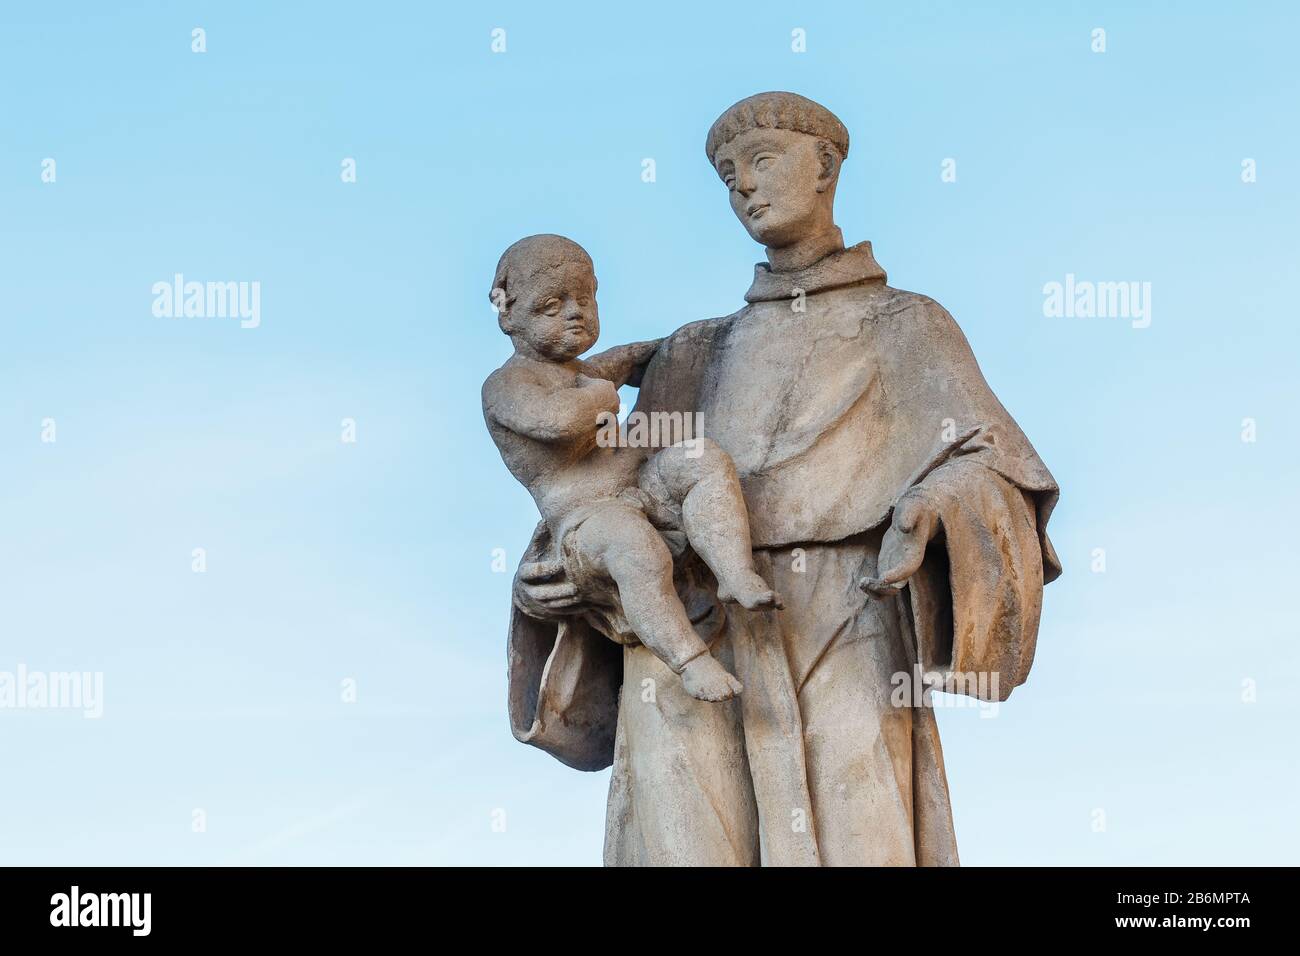 DECEMBER 2017, CESKY KRUMLOV, CZECH REPUBLIC: The statue of Saint Anthony of Padua with Baby Jesus in his arms in Cesky Krumlov castle Stock Photo